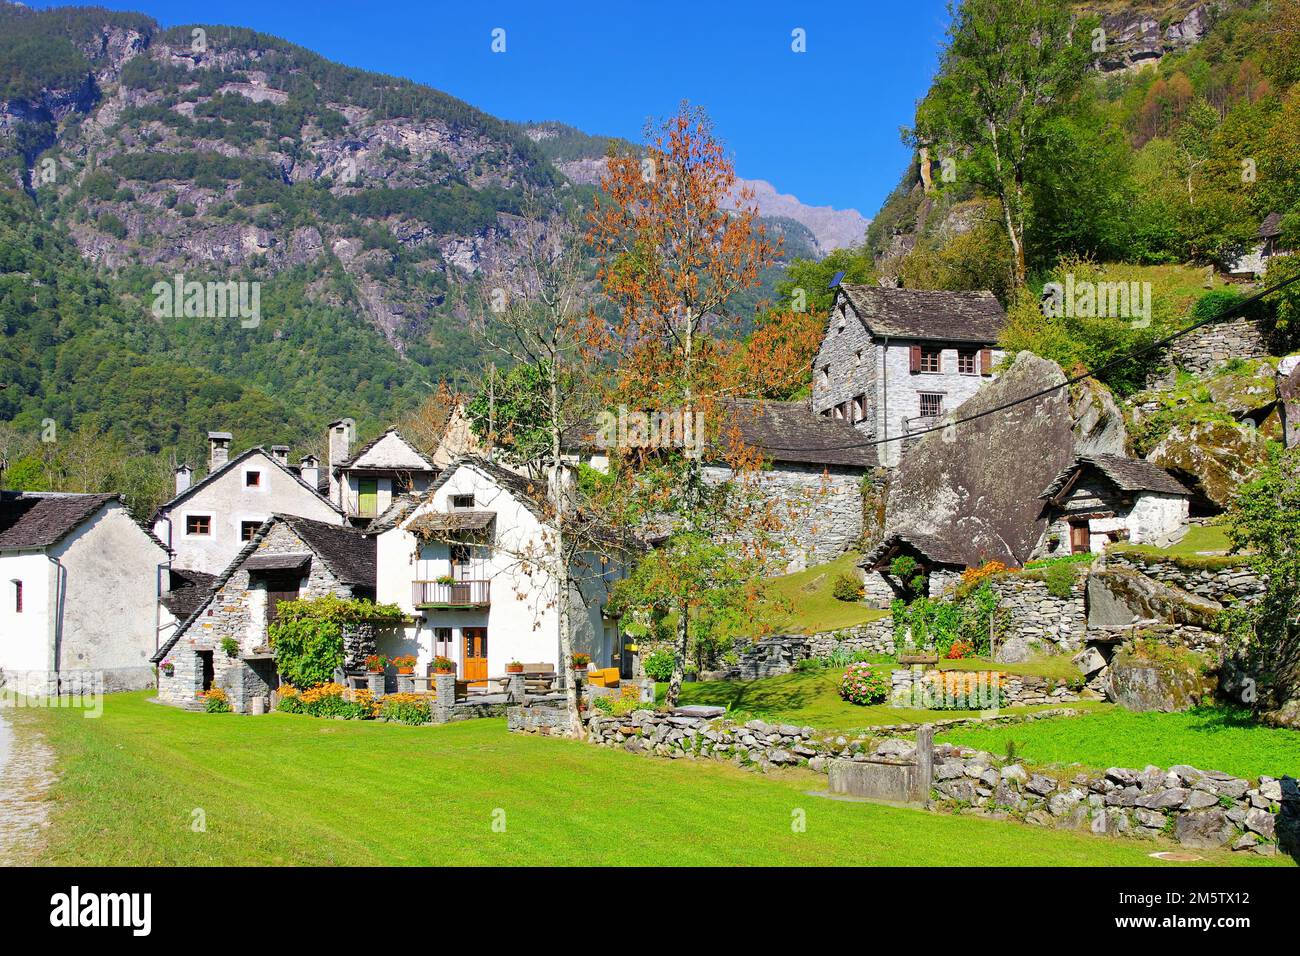 the small hamlet of Ritorto in the Bavona Valley, Ticino in Switzerland Stock Photo